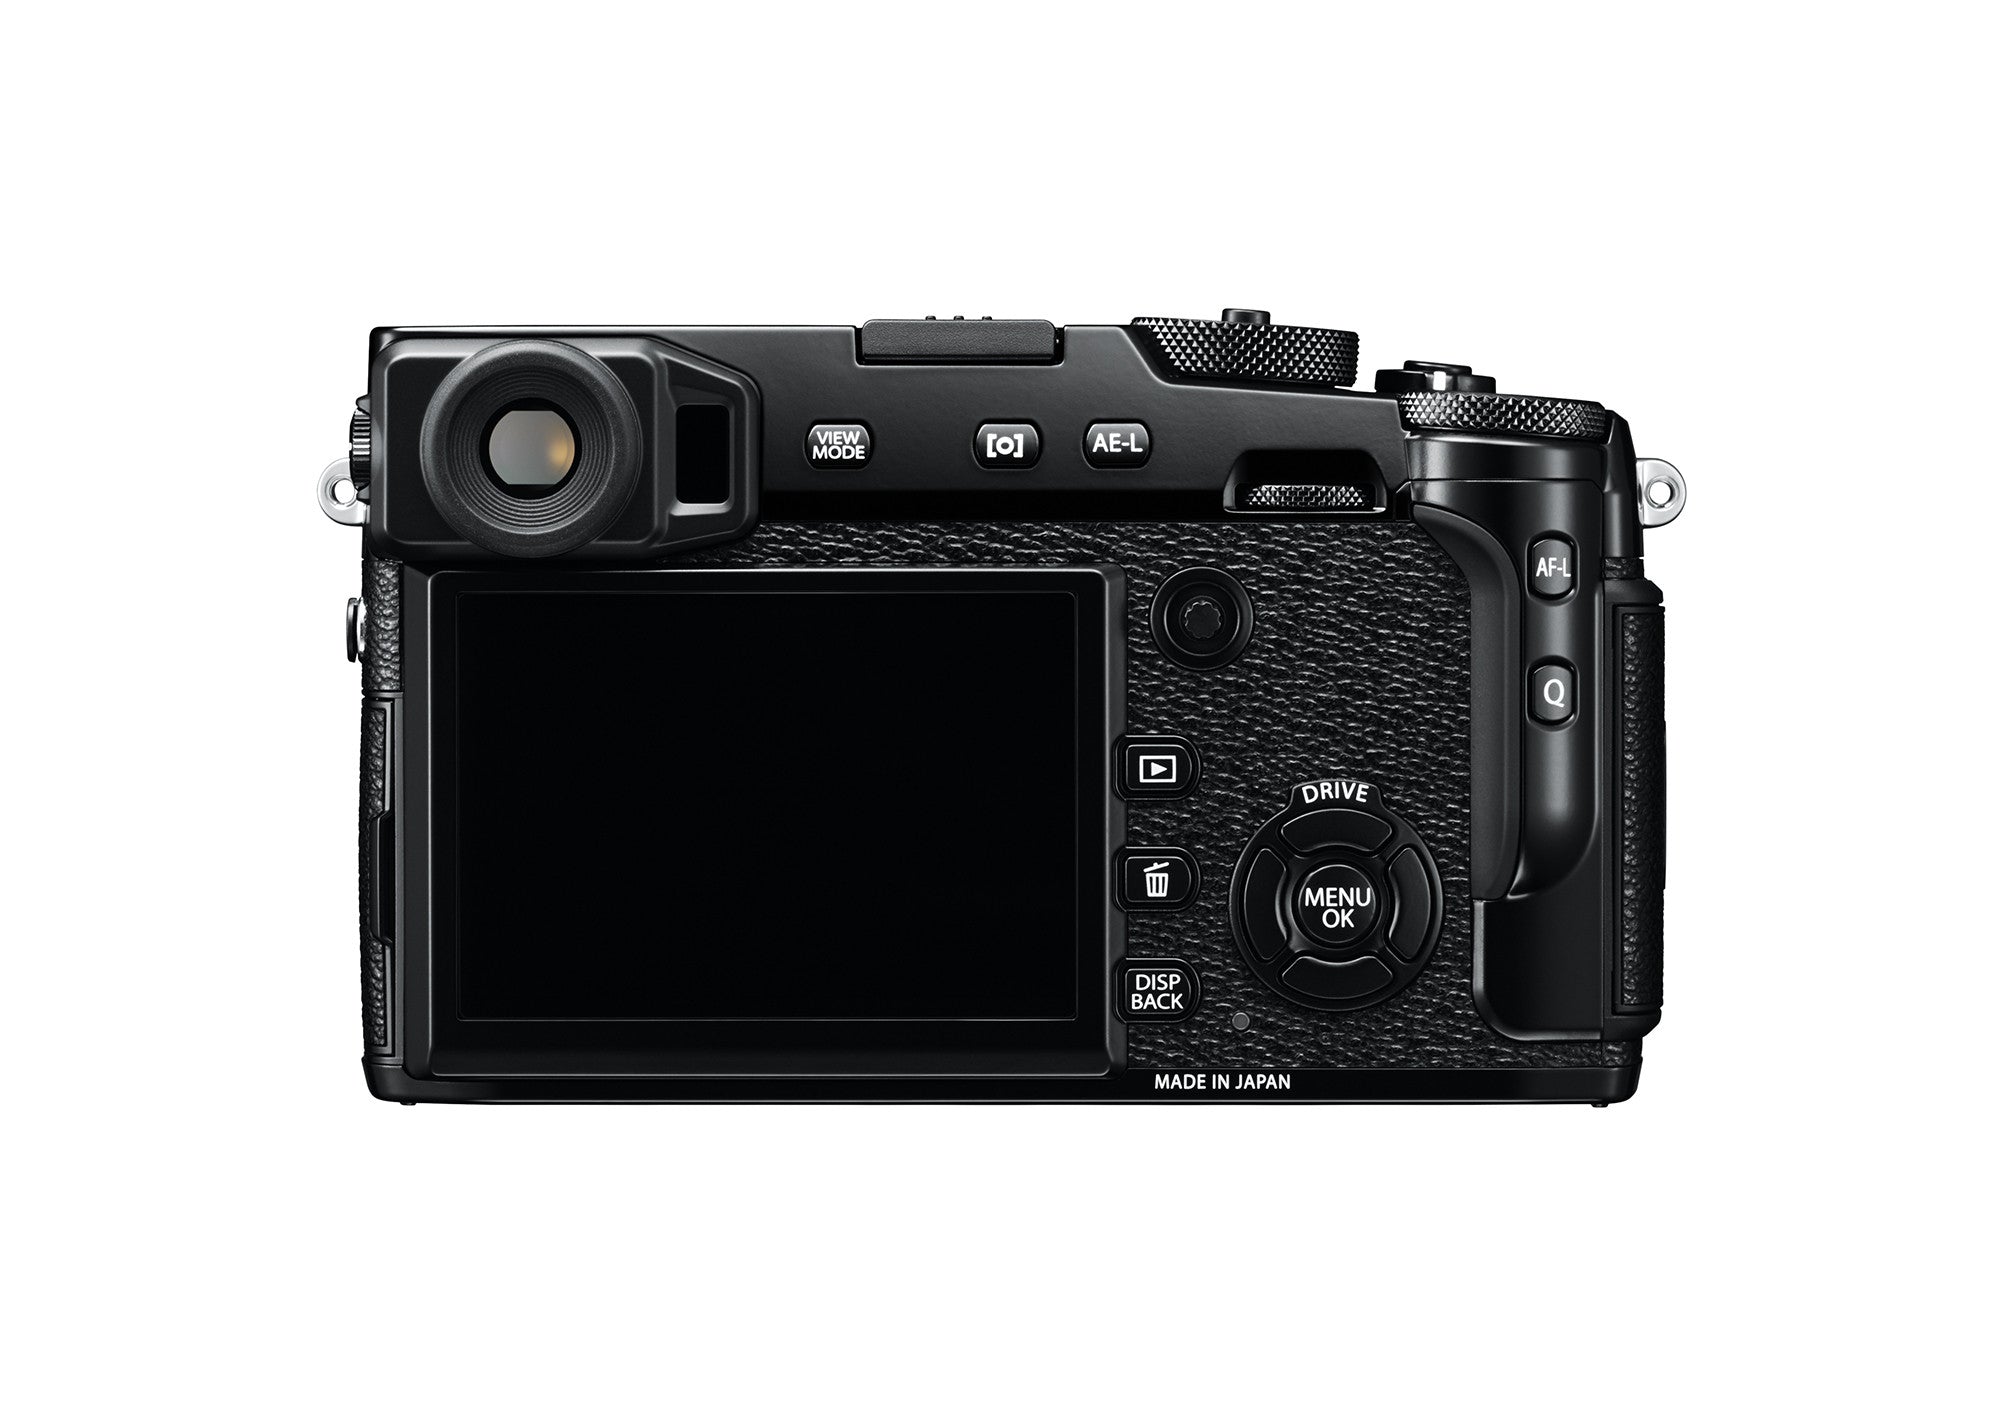 Fujifilm X-Pro2 Digital Camera Body (Black), camera mirrorless cameras, Fujifilm - Pictureline  - 2